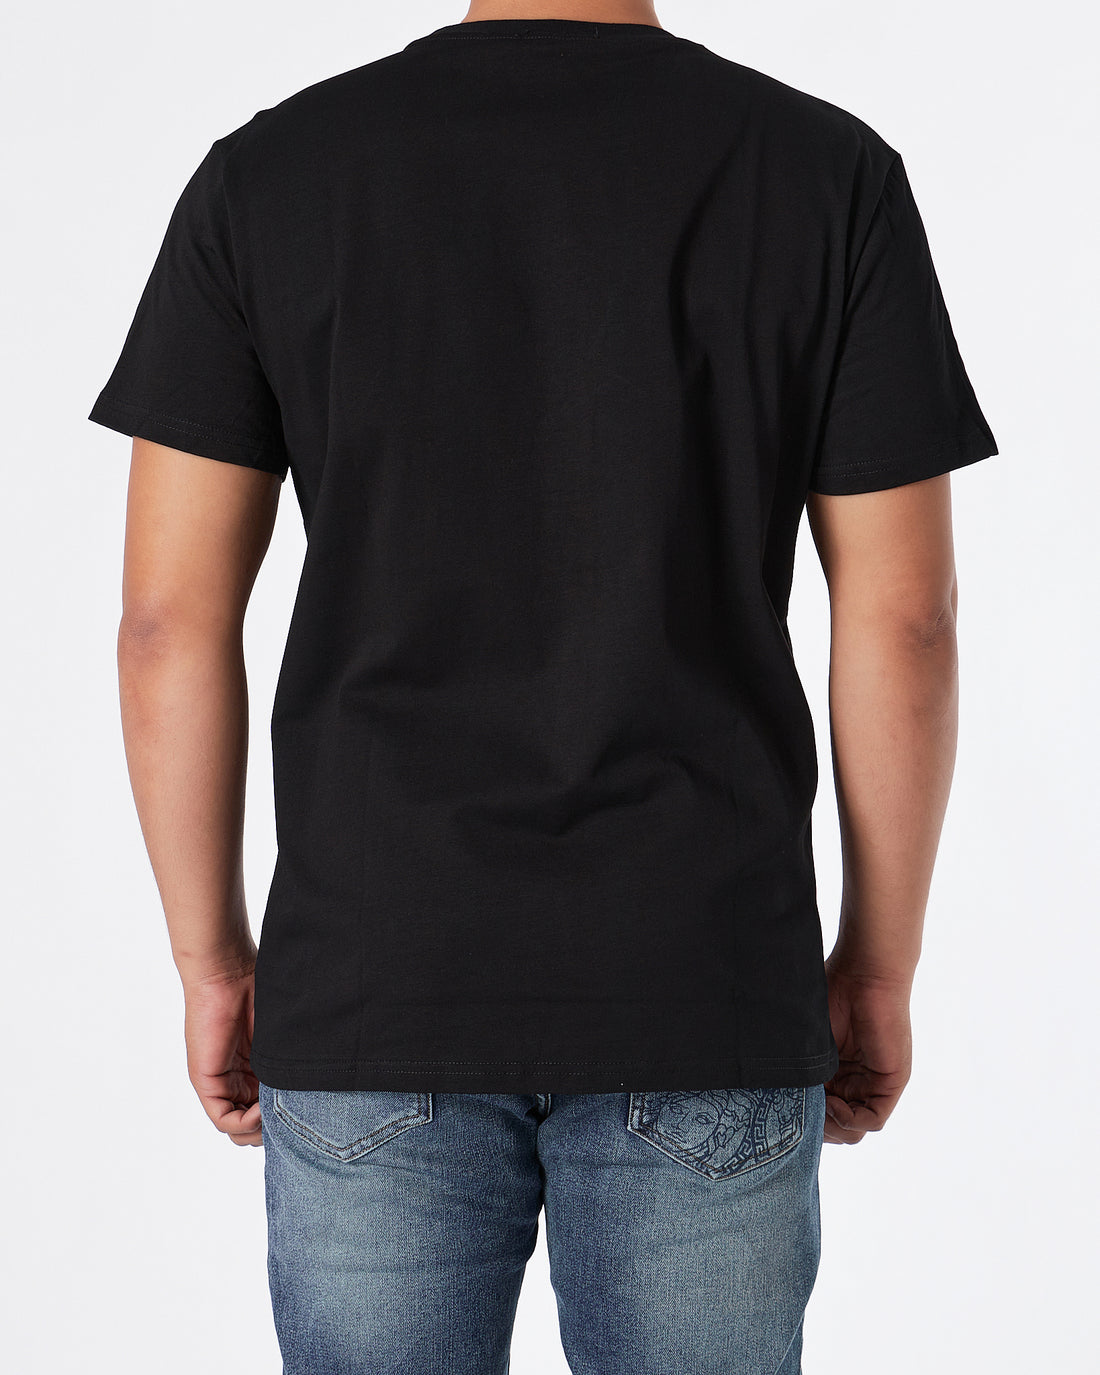 VER Rhinestone Medusa Men Black T-Shirt 22.90